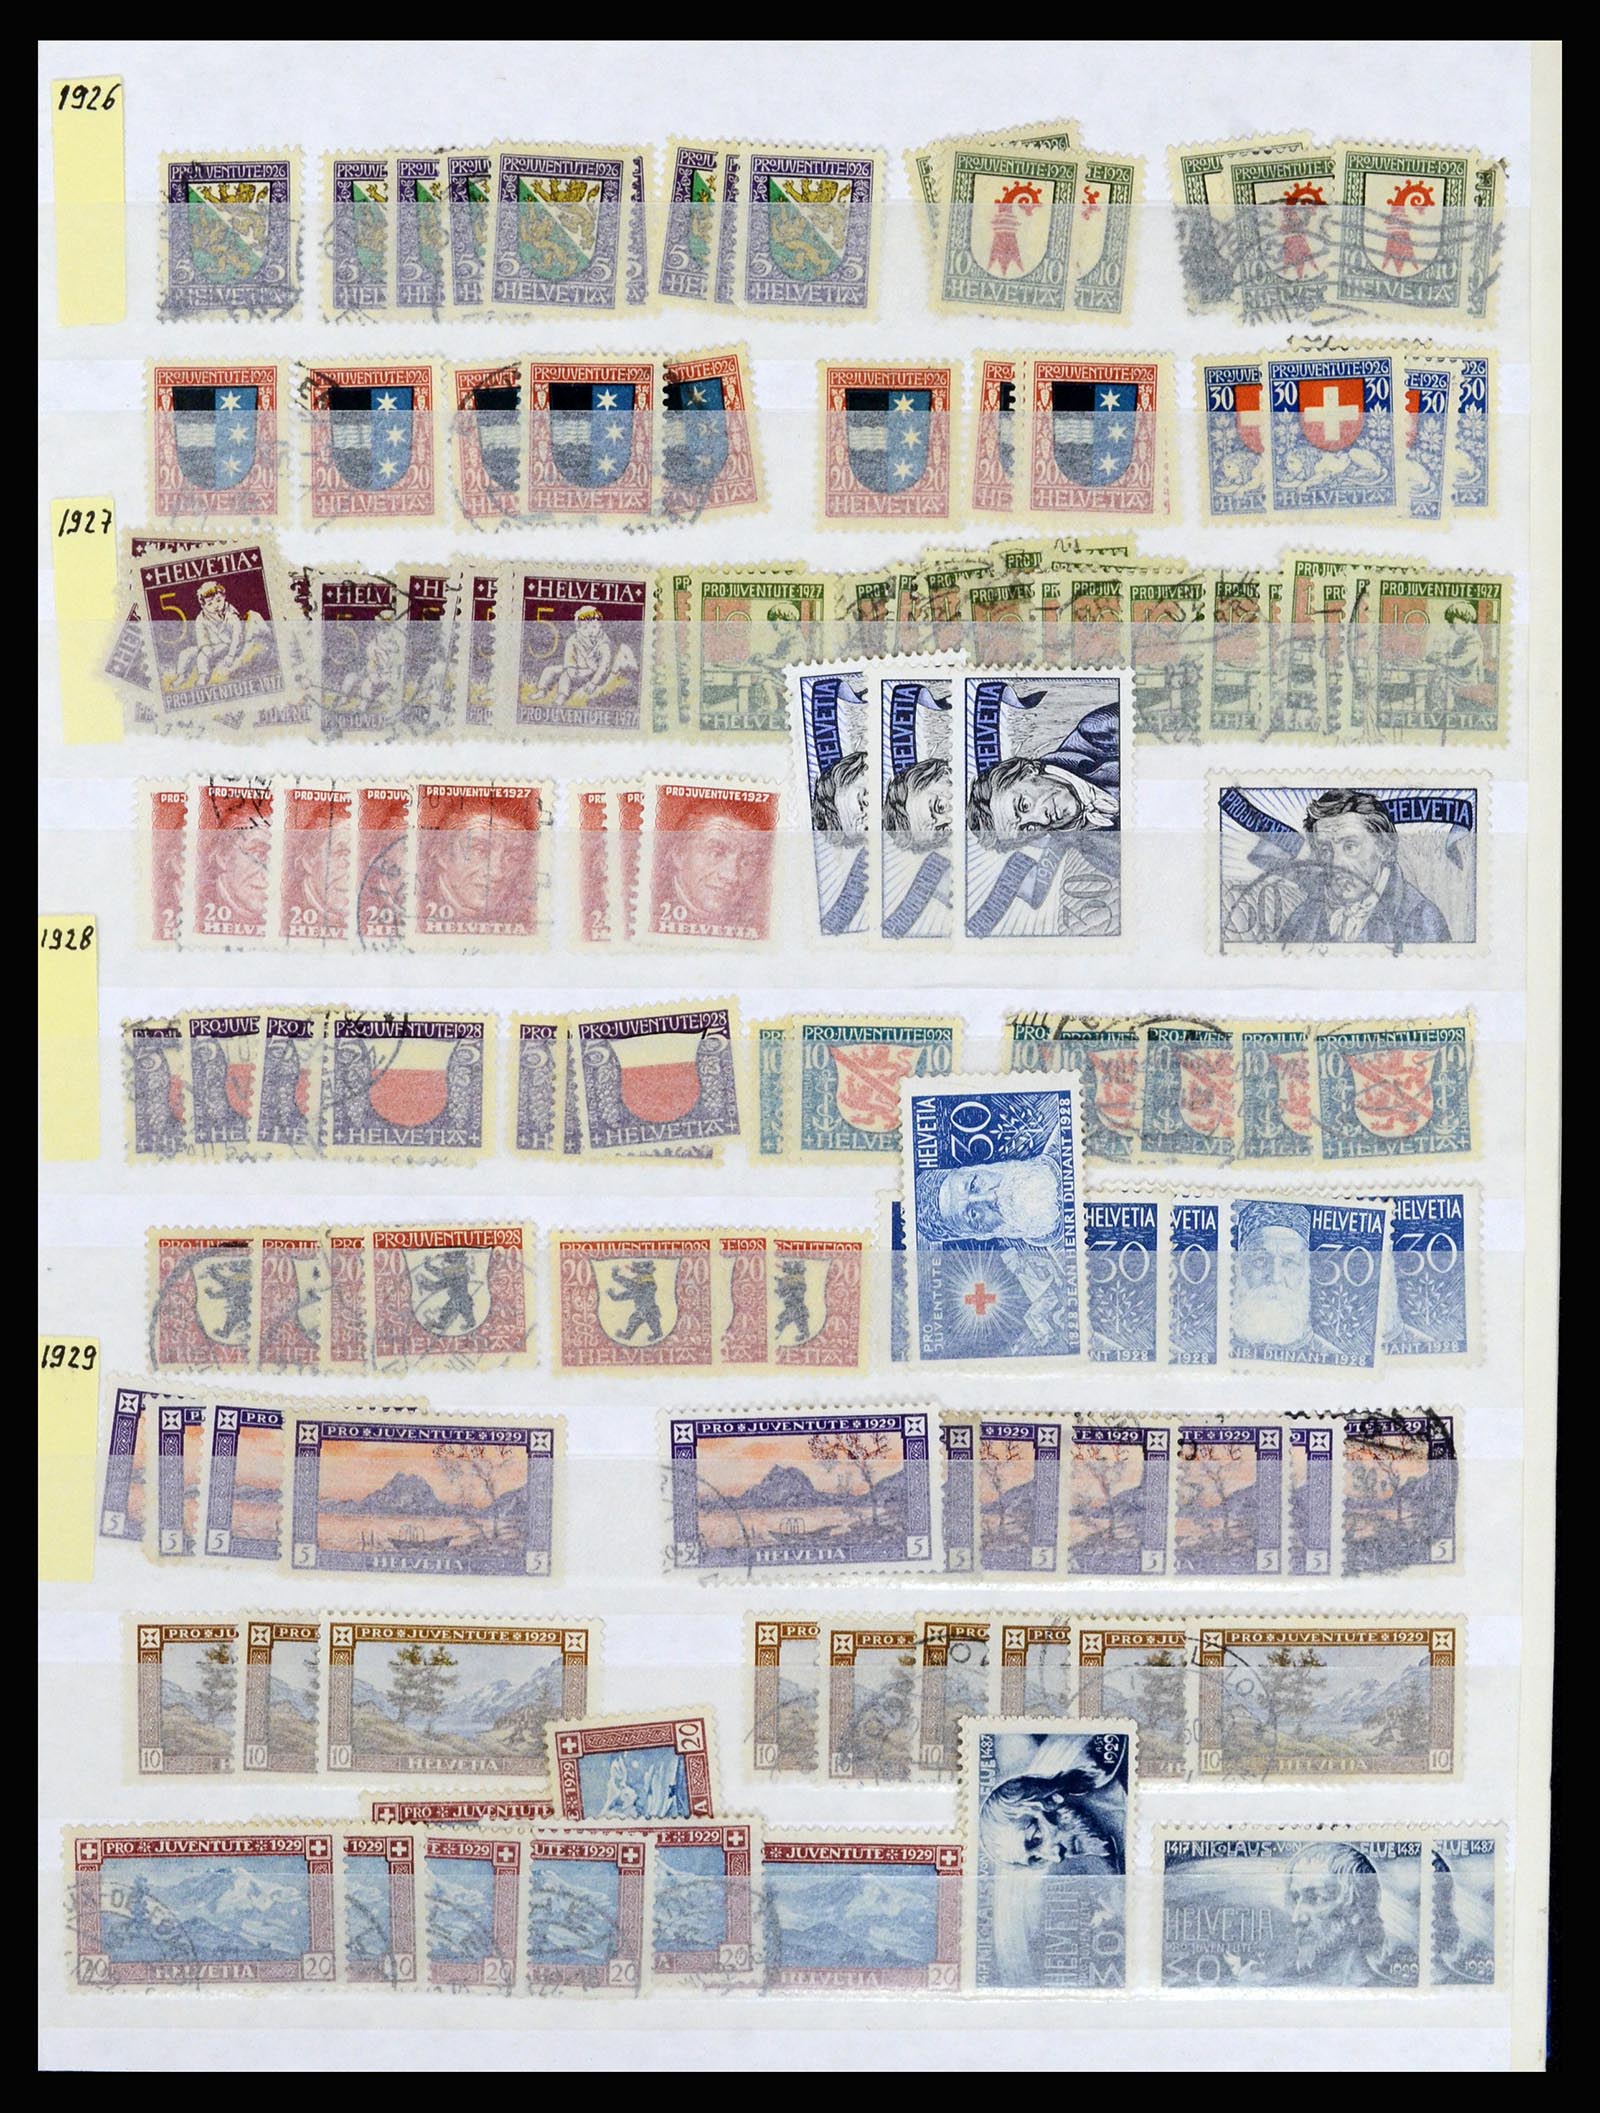 37061 003 - Stamp collection 37061 Switzerland 1913-2000.